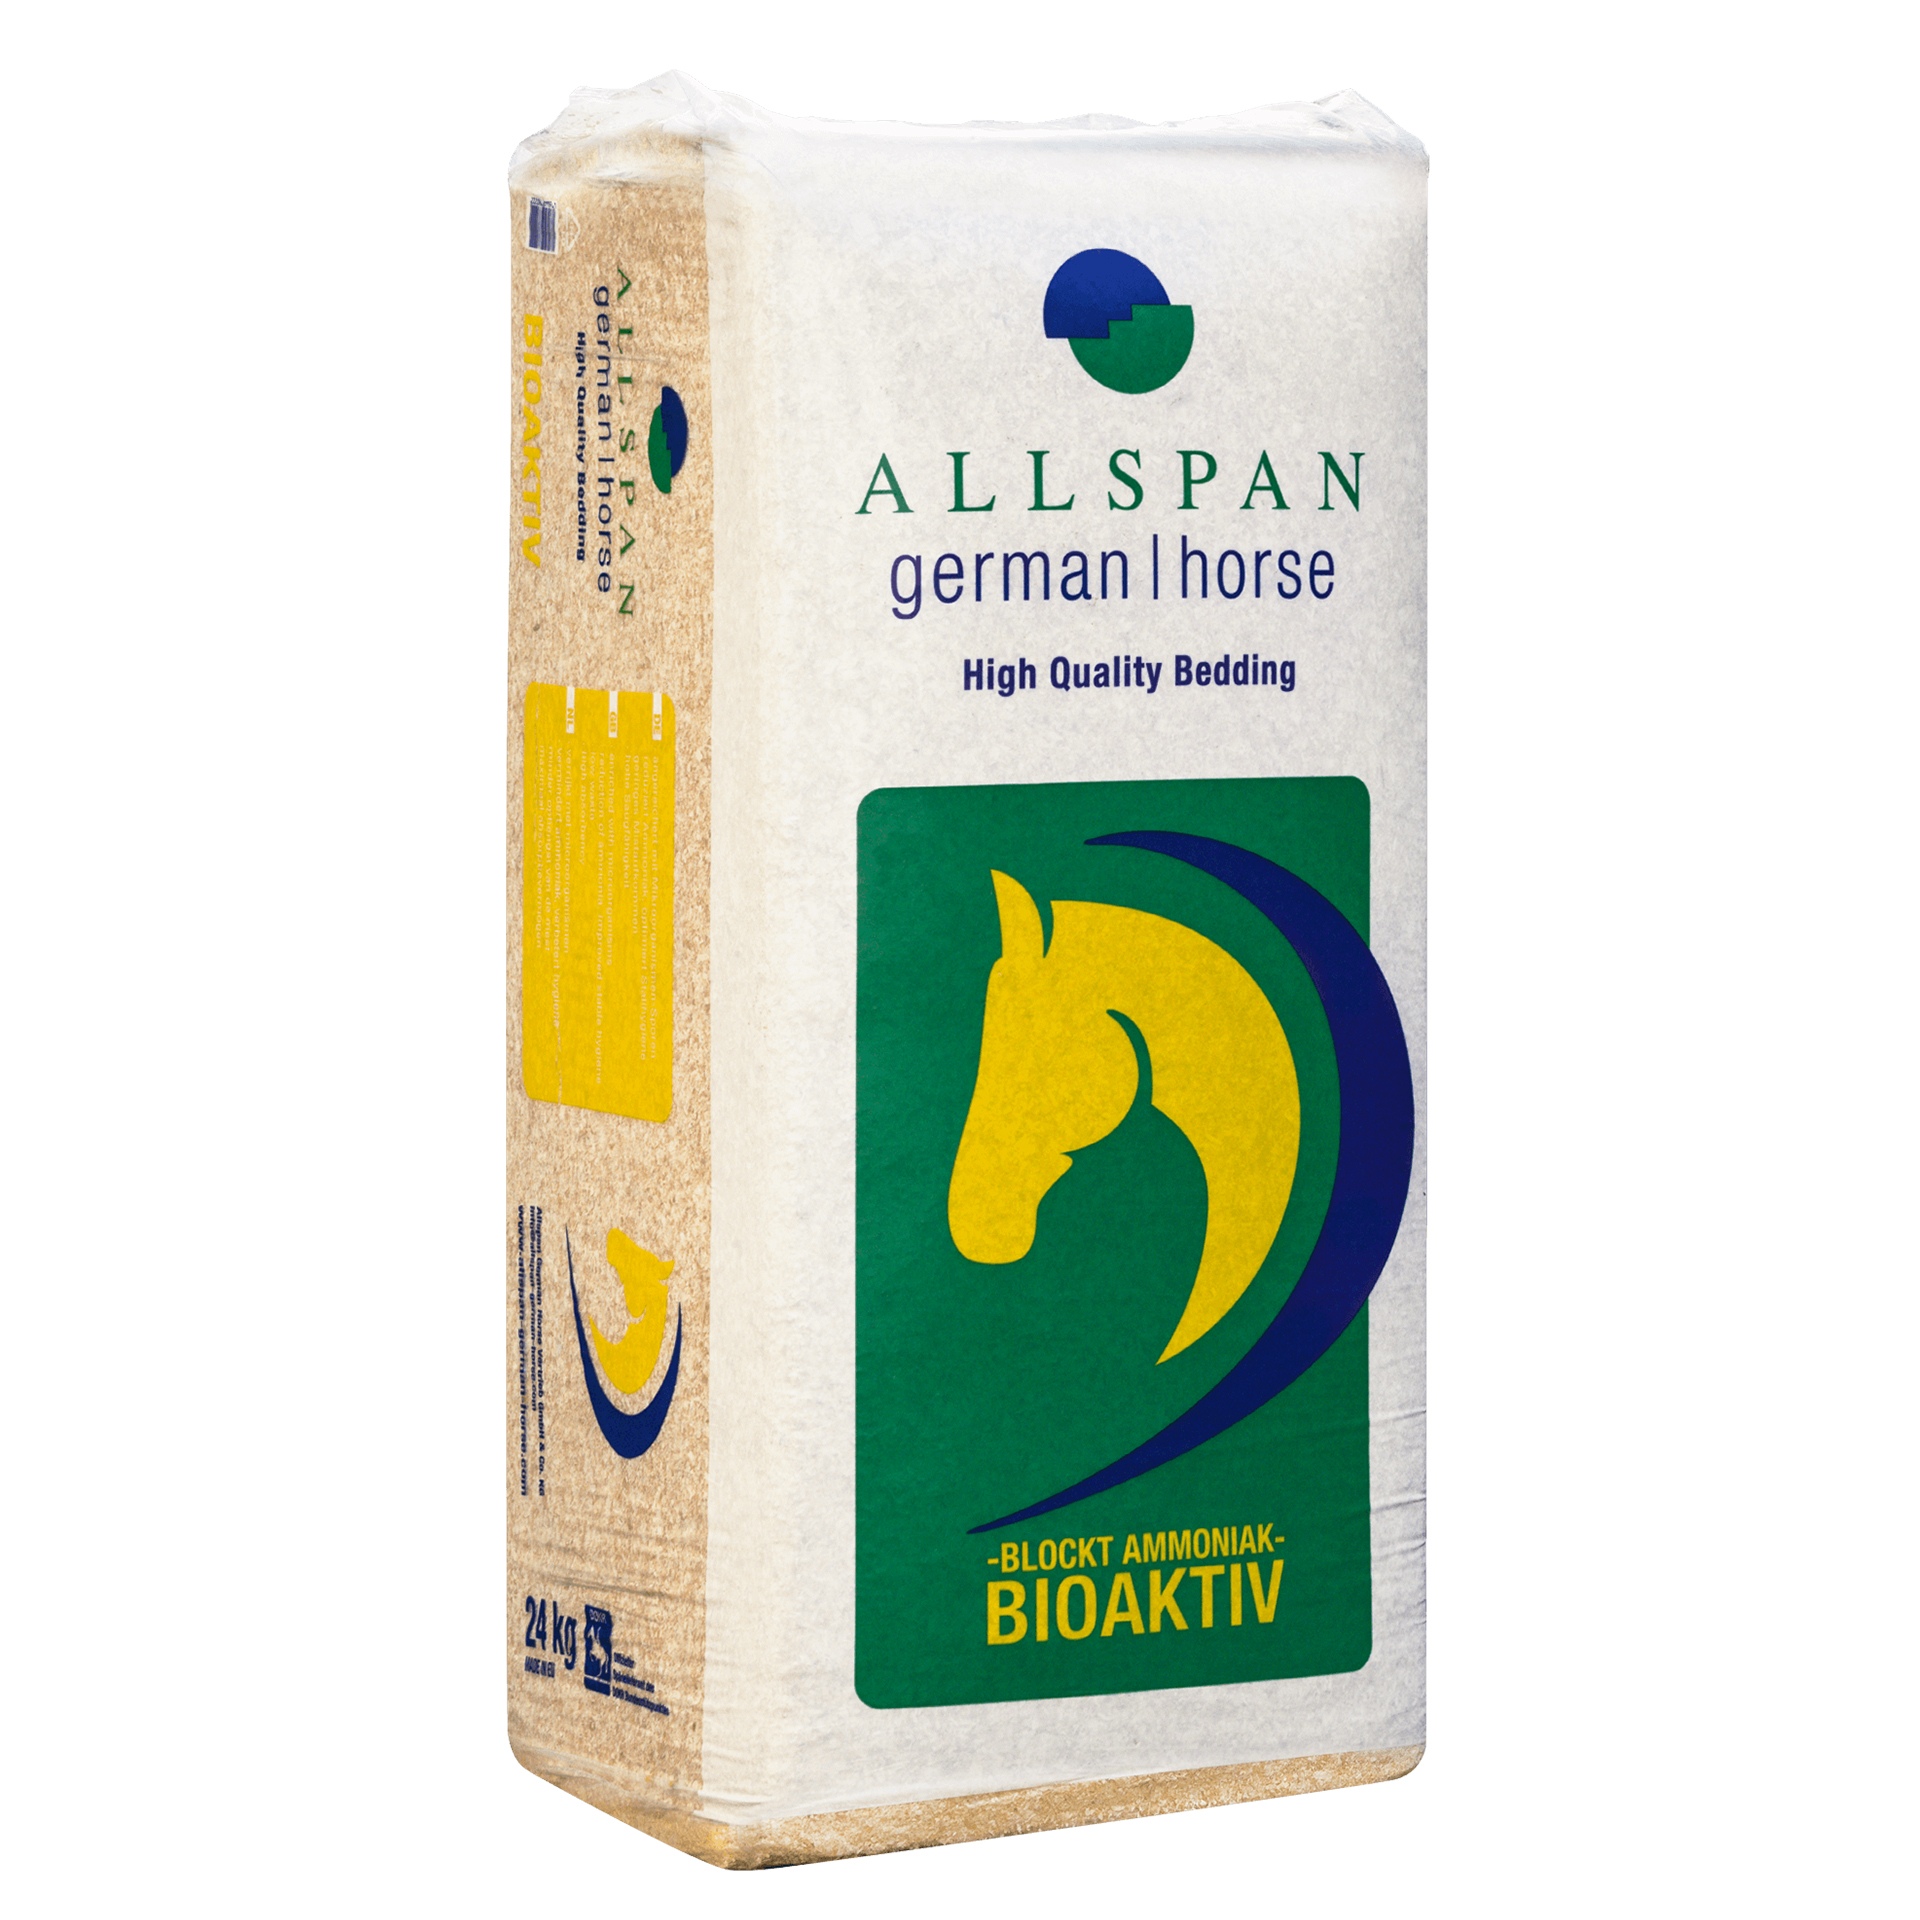 ALLSPAN 24 kg Einstreu German Horse Bioaktiv